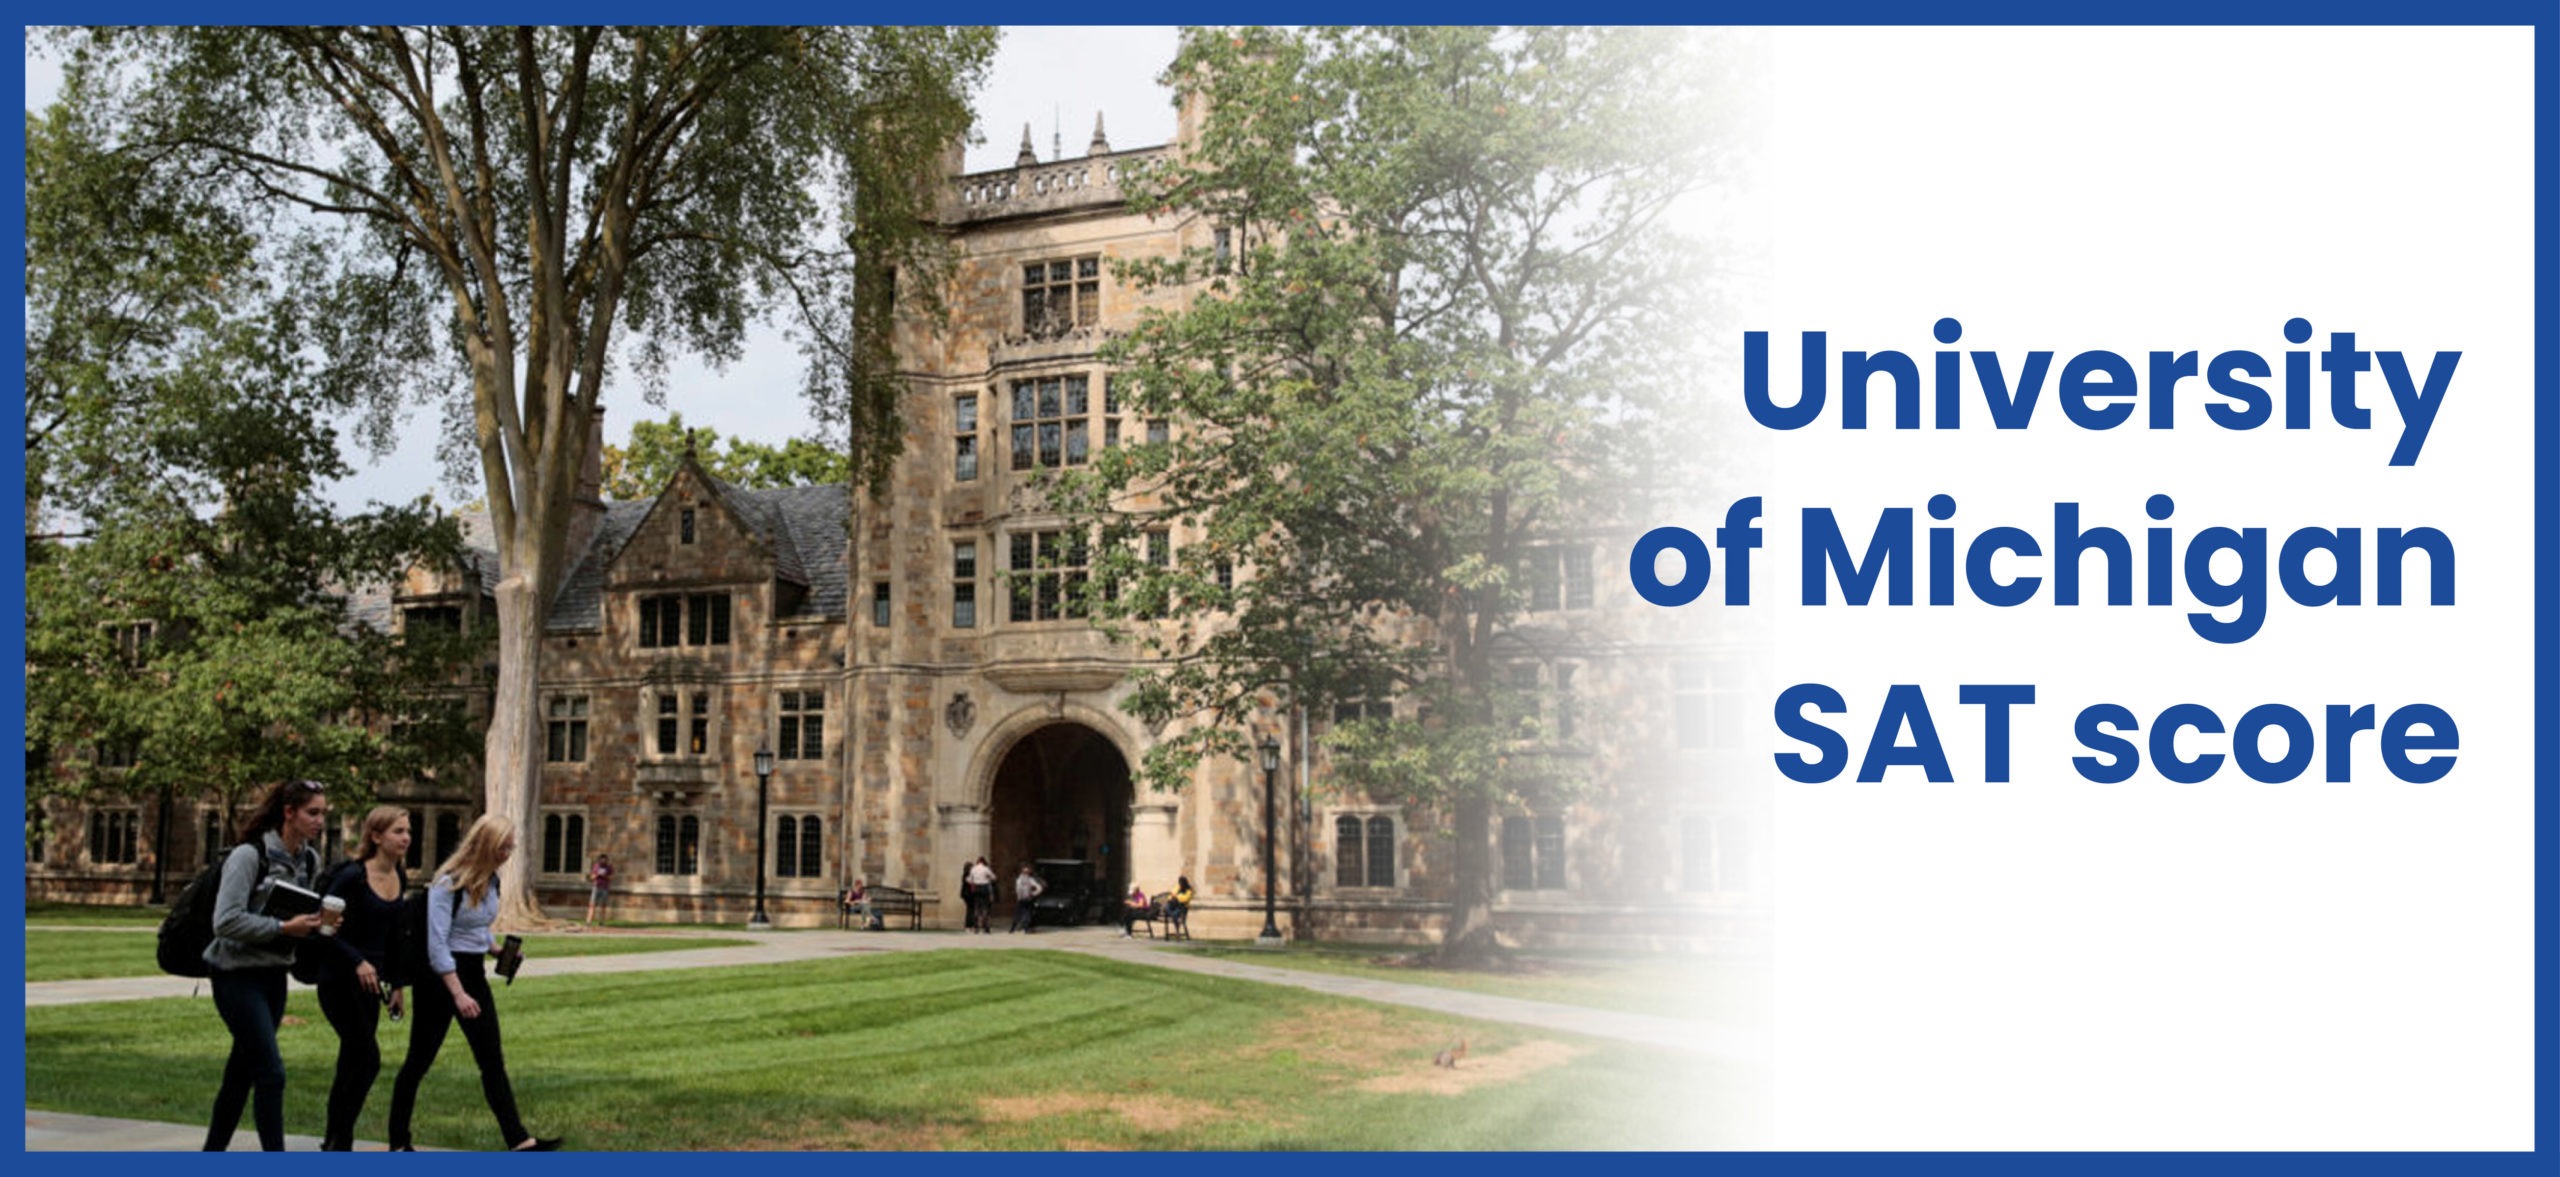 (University of Michigan) UMich SAT, GPA, Admission Details